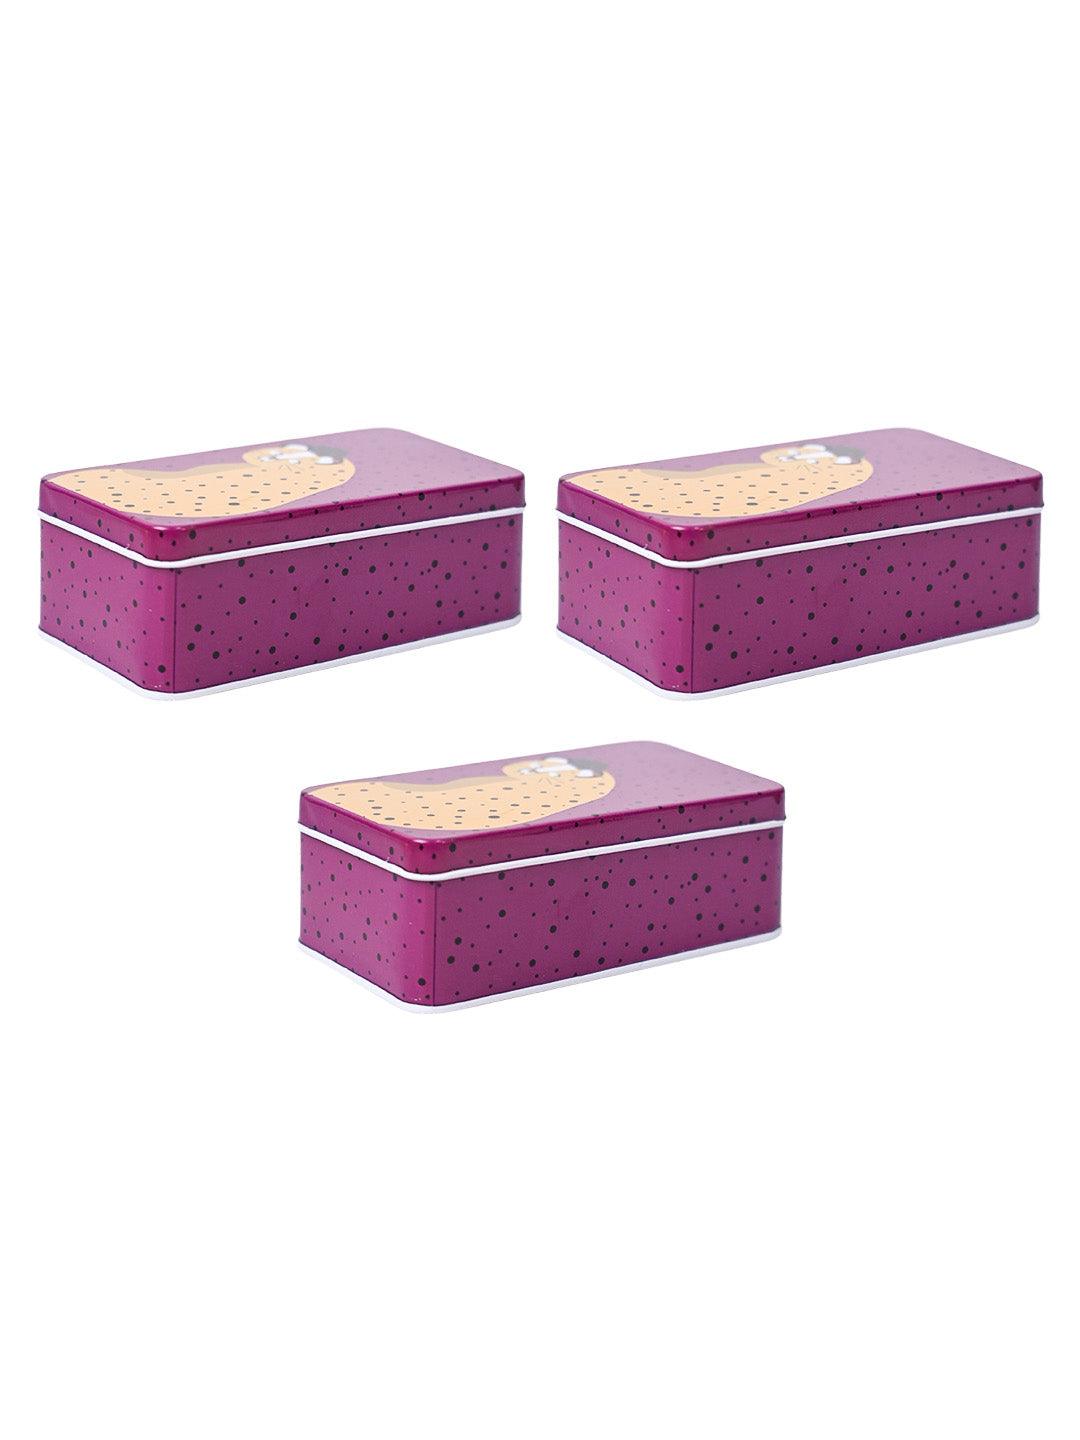 Animal Print Tin Storage Box Container - Set Of 3, Purple - MARKET99